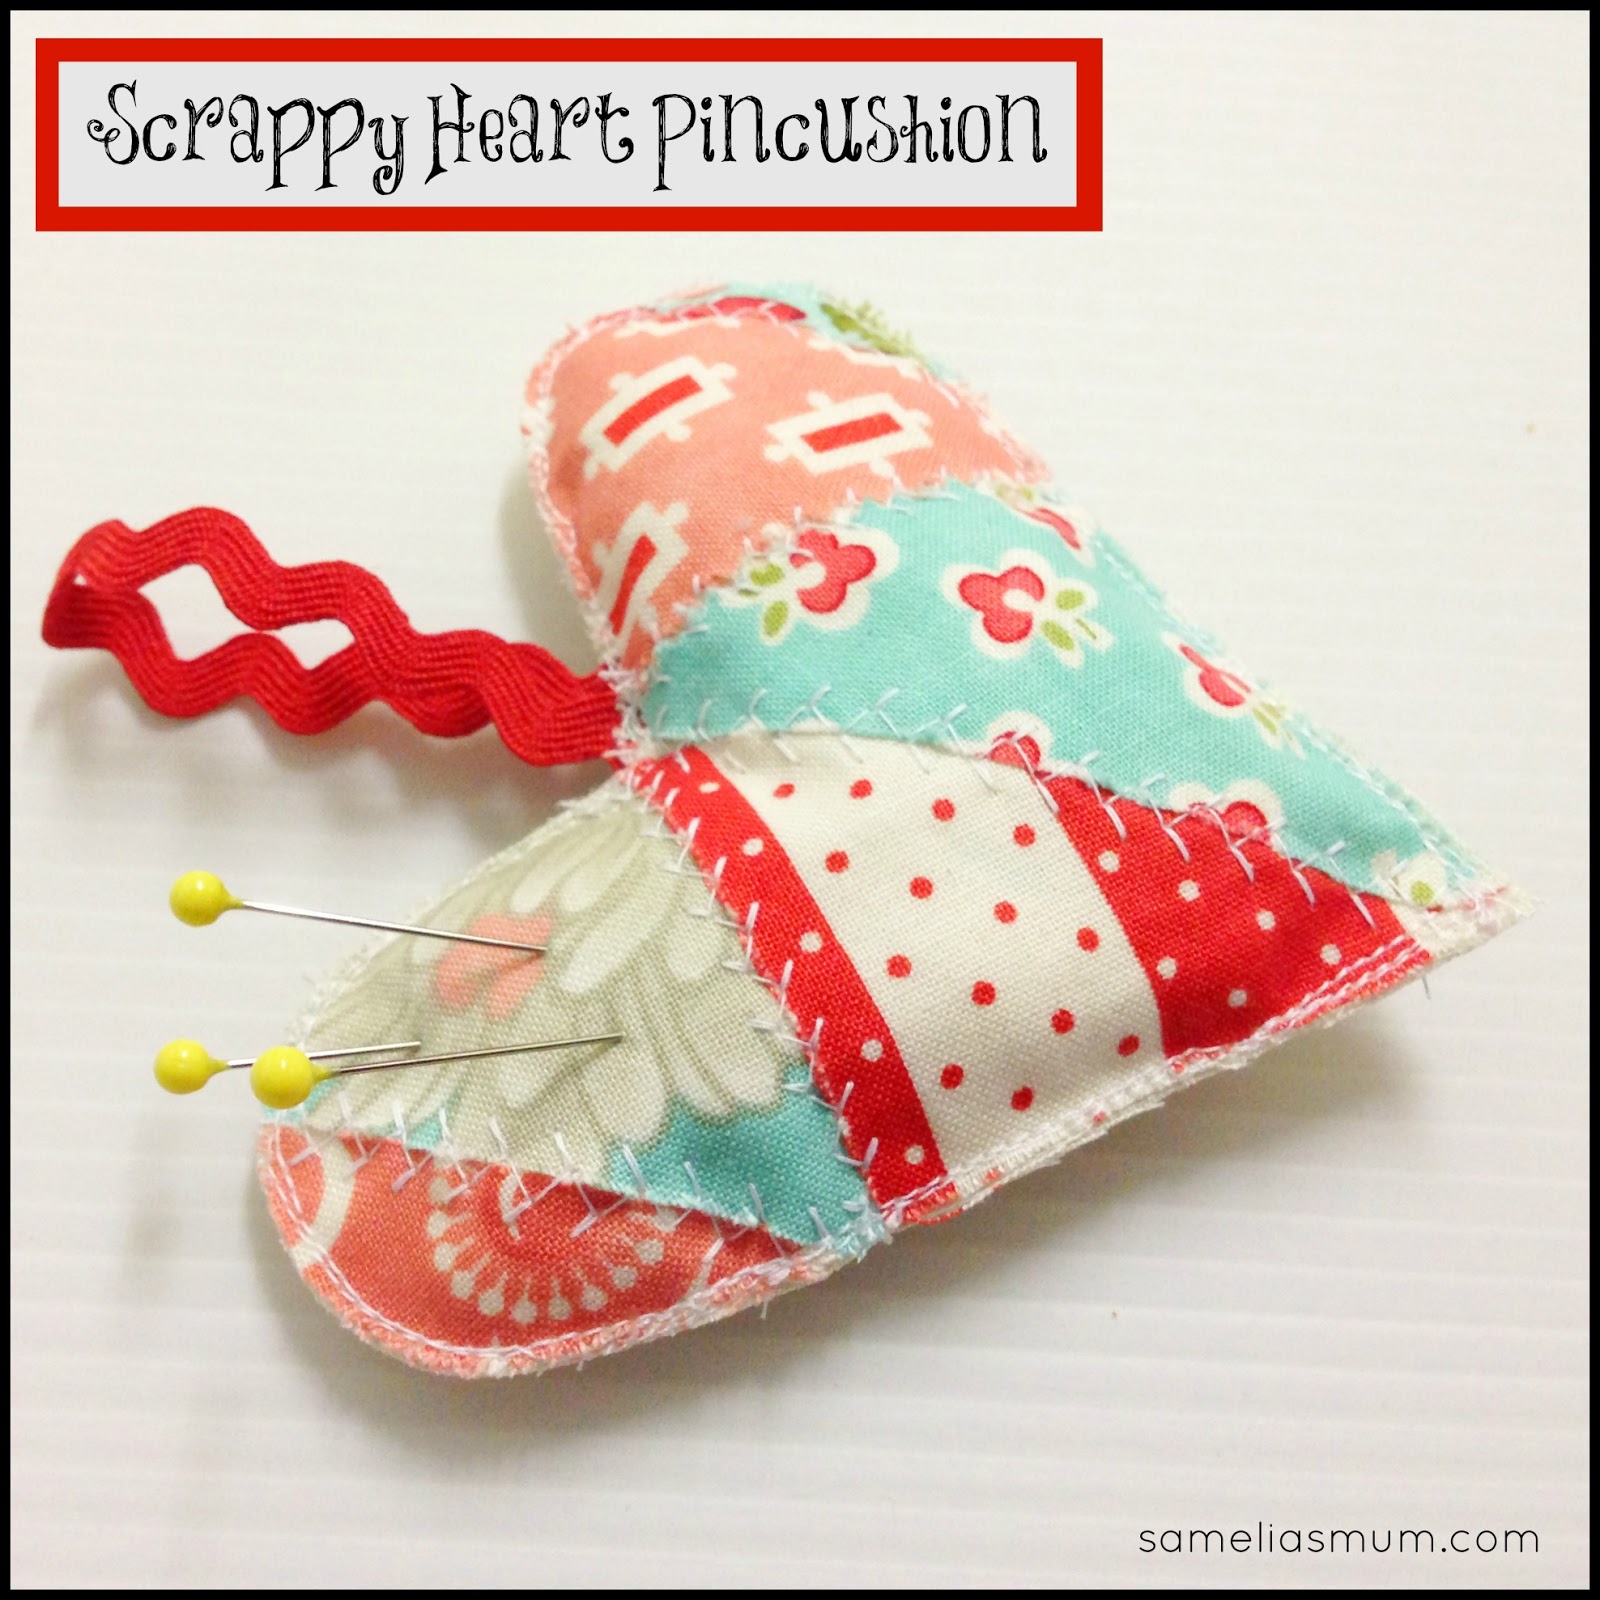 Scrappy Pear Pincushion Kit